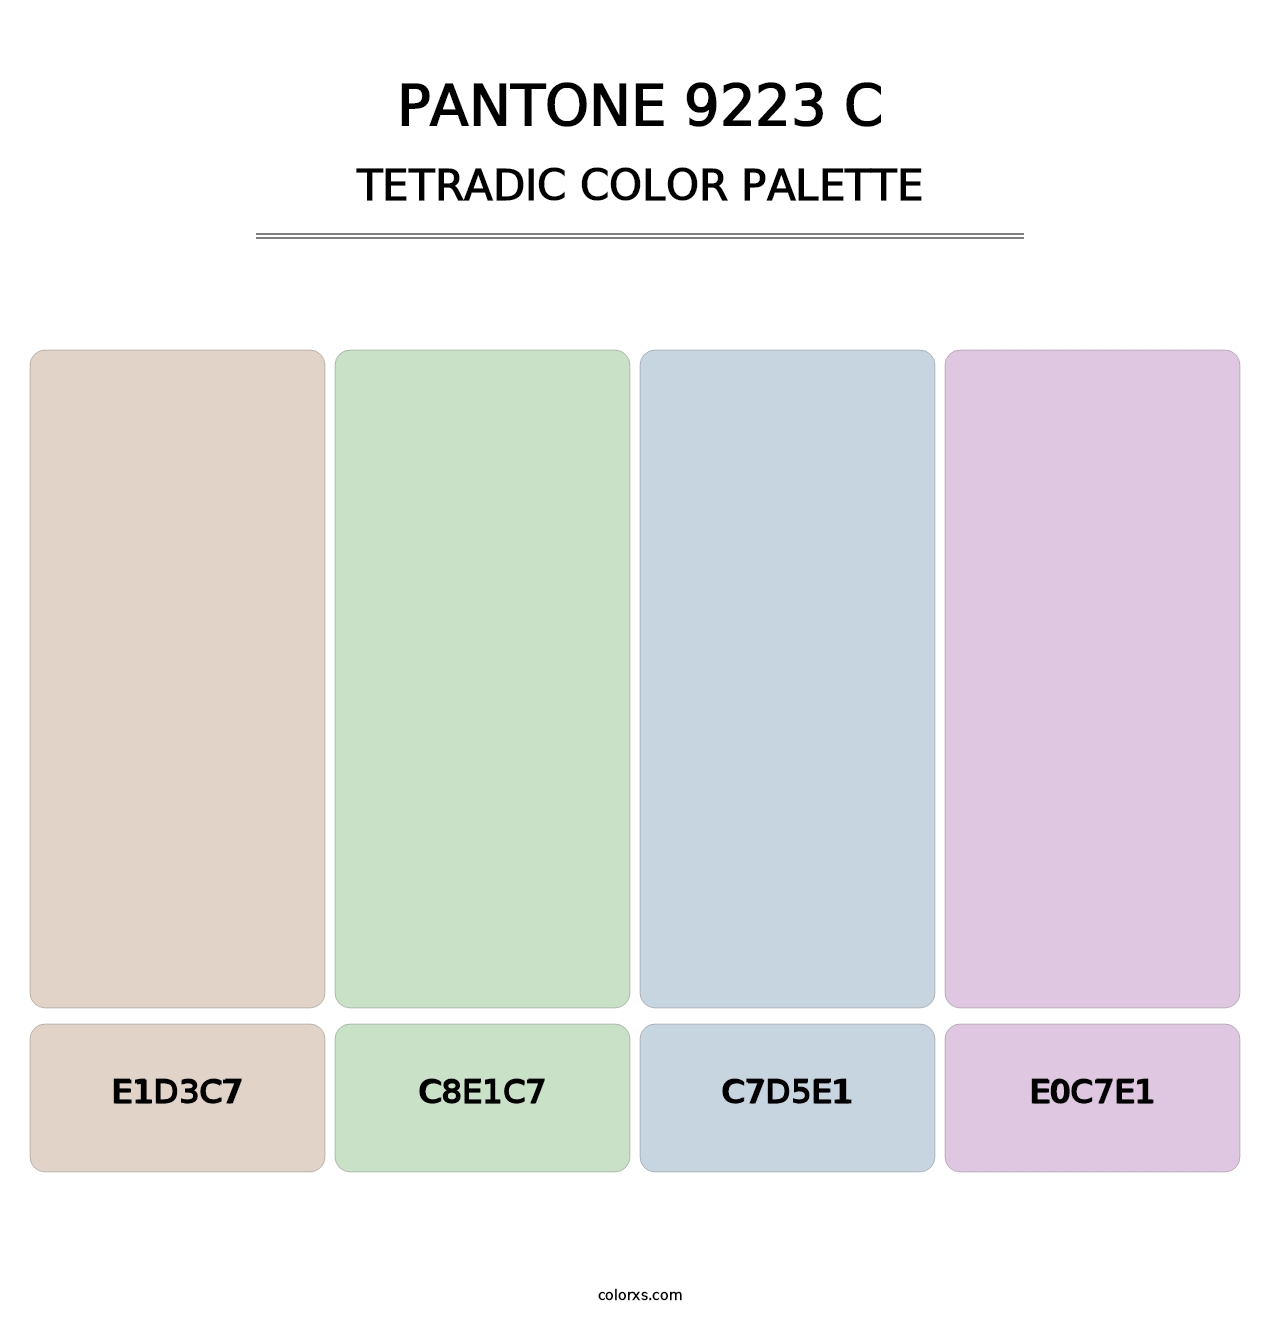 PANTONE 9223 C - Tetradic Color Palette